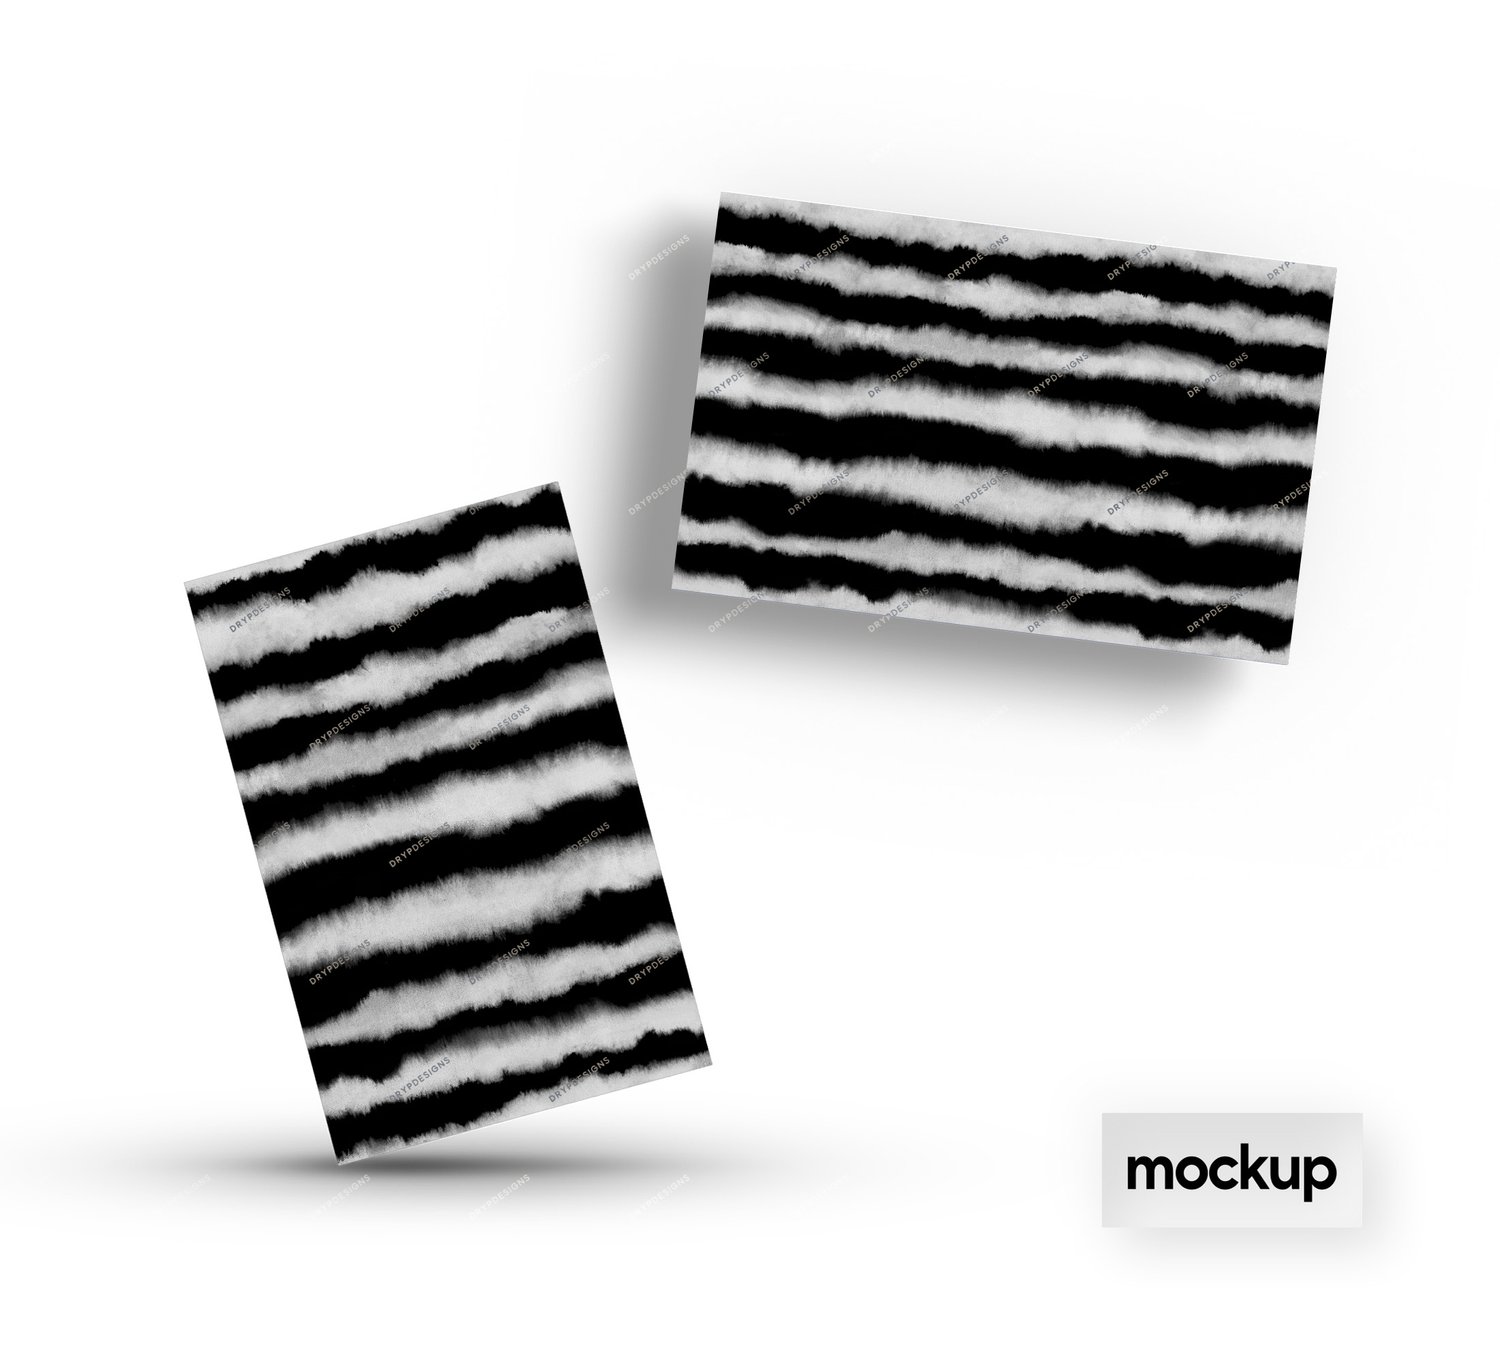 Pattern horizontal stripe seamless black and white color. Stripe